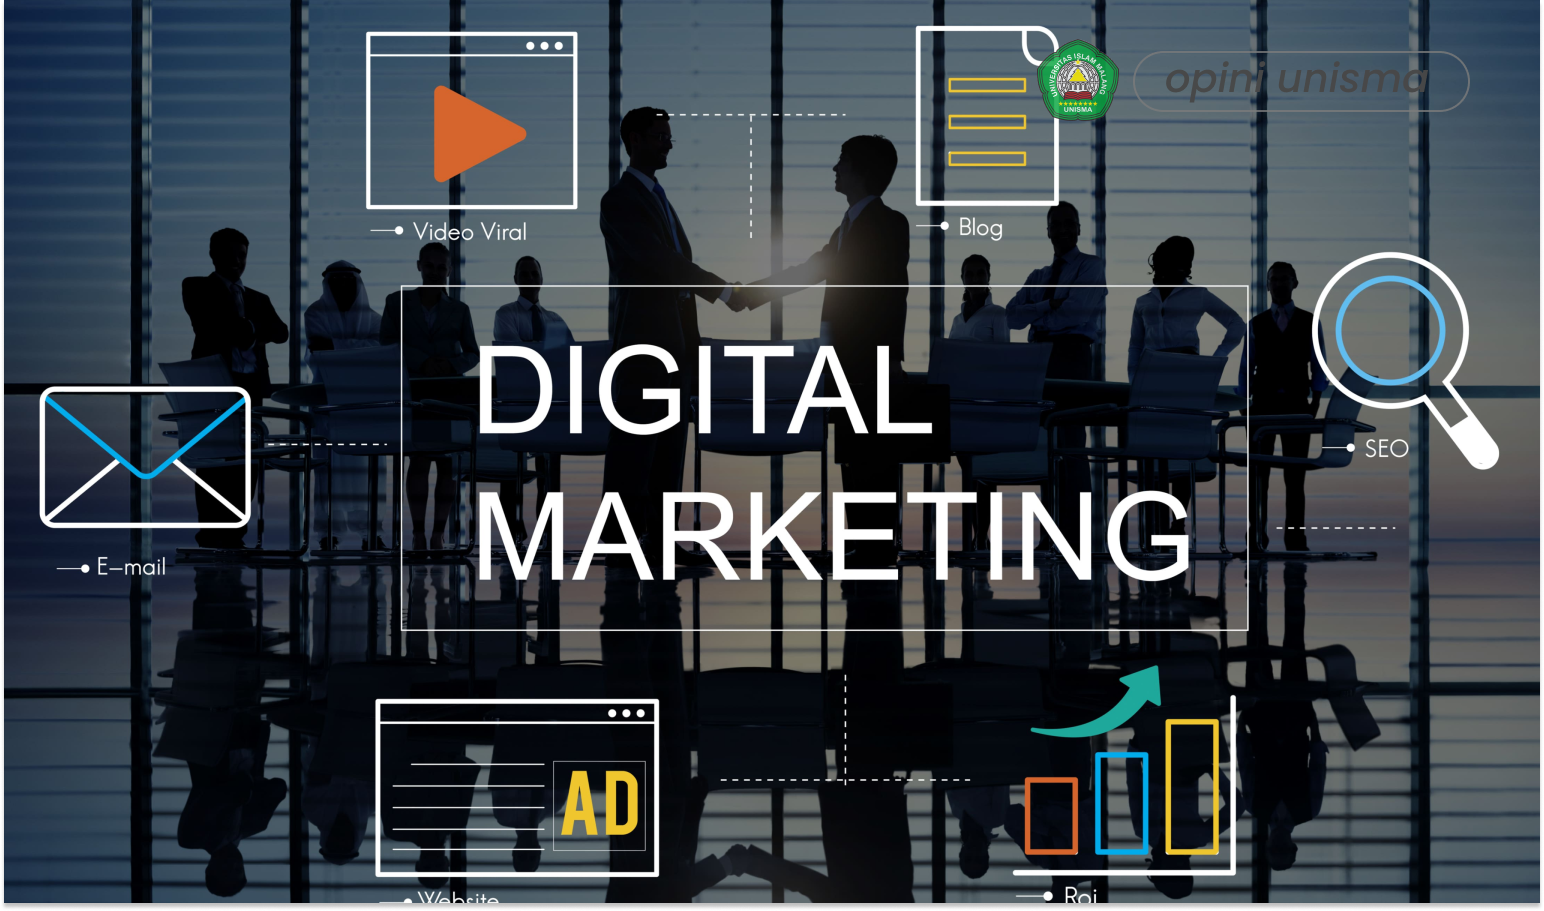 Tren Teknologi Digital Marketing